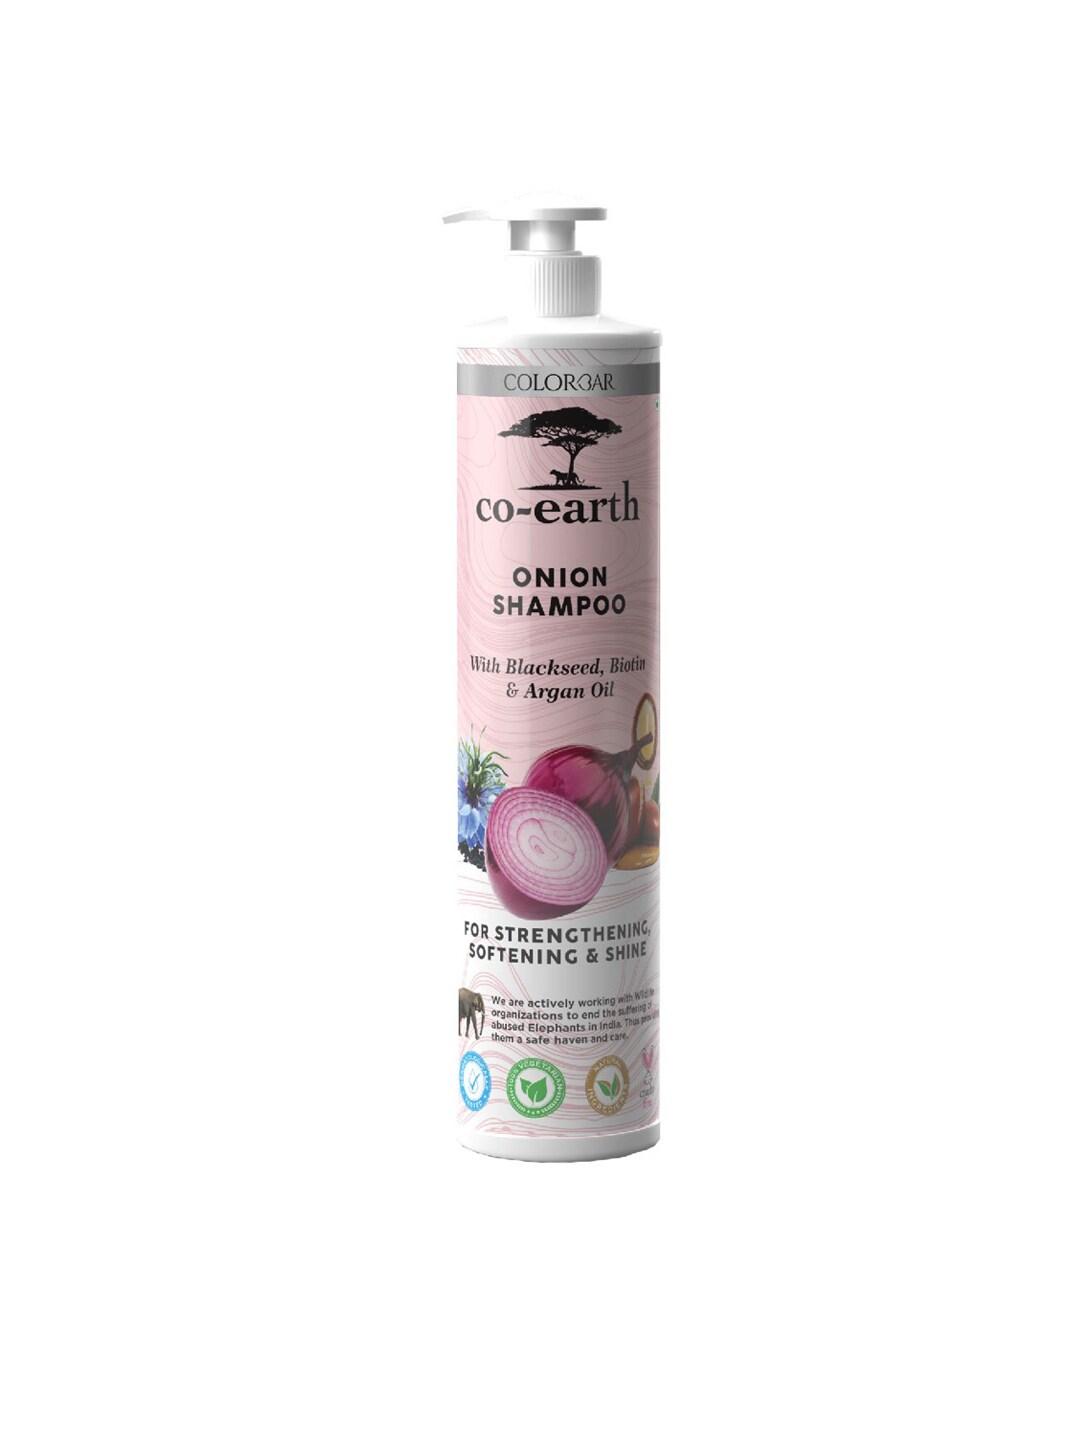 Colorbar Co-Earth Onion Shampoo with Argan Oil & Blackseed - 300 ml